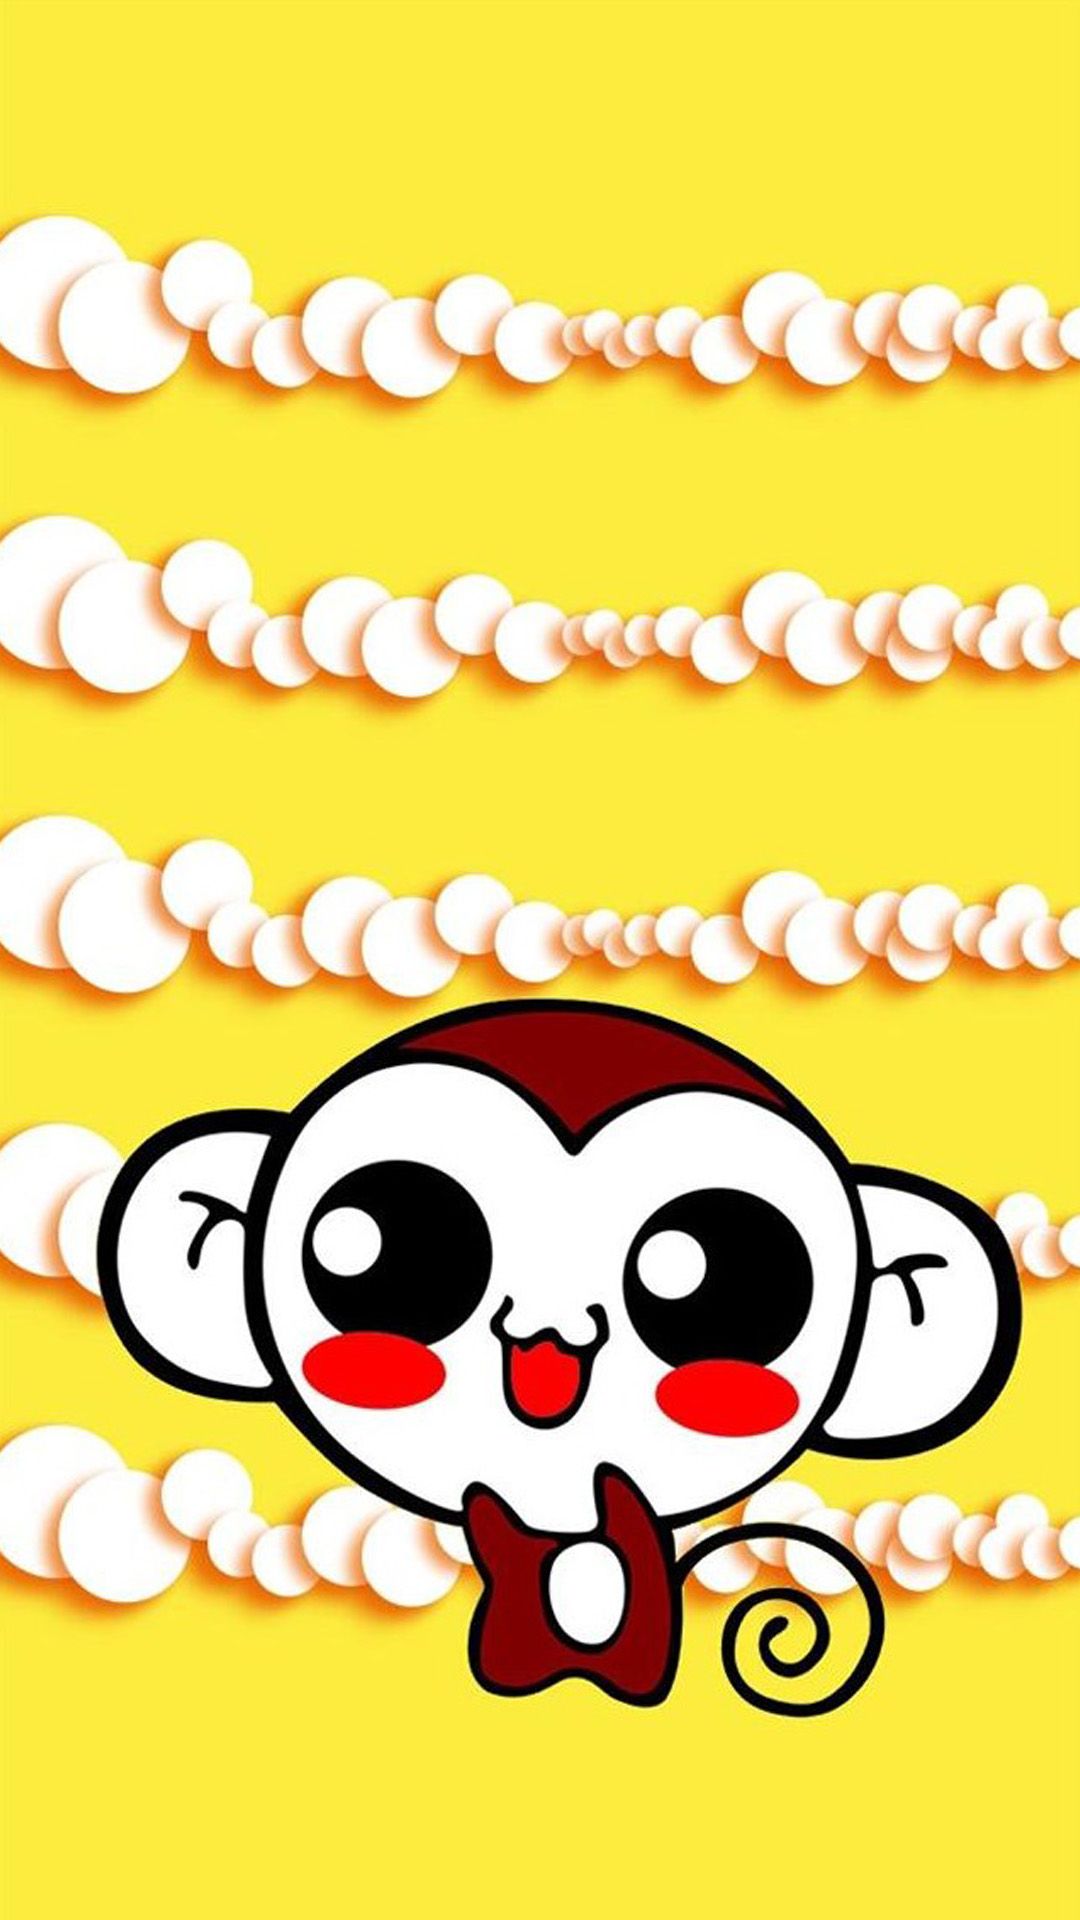 Cute Sweet Hippie Monkey iPhone 6 Wallpaper Download | iPhone ...